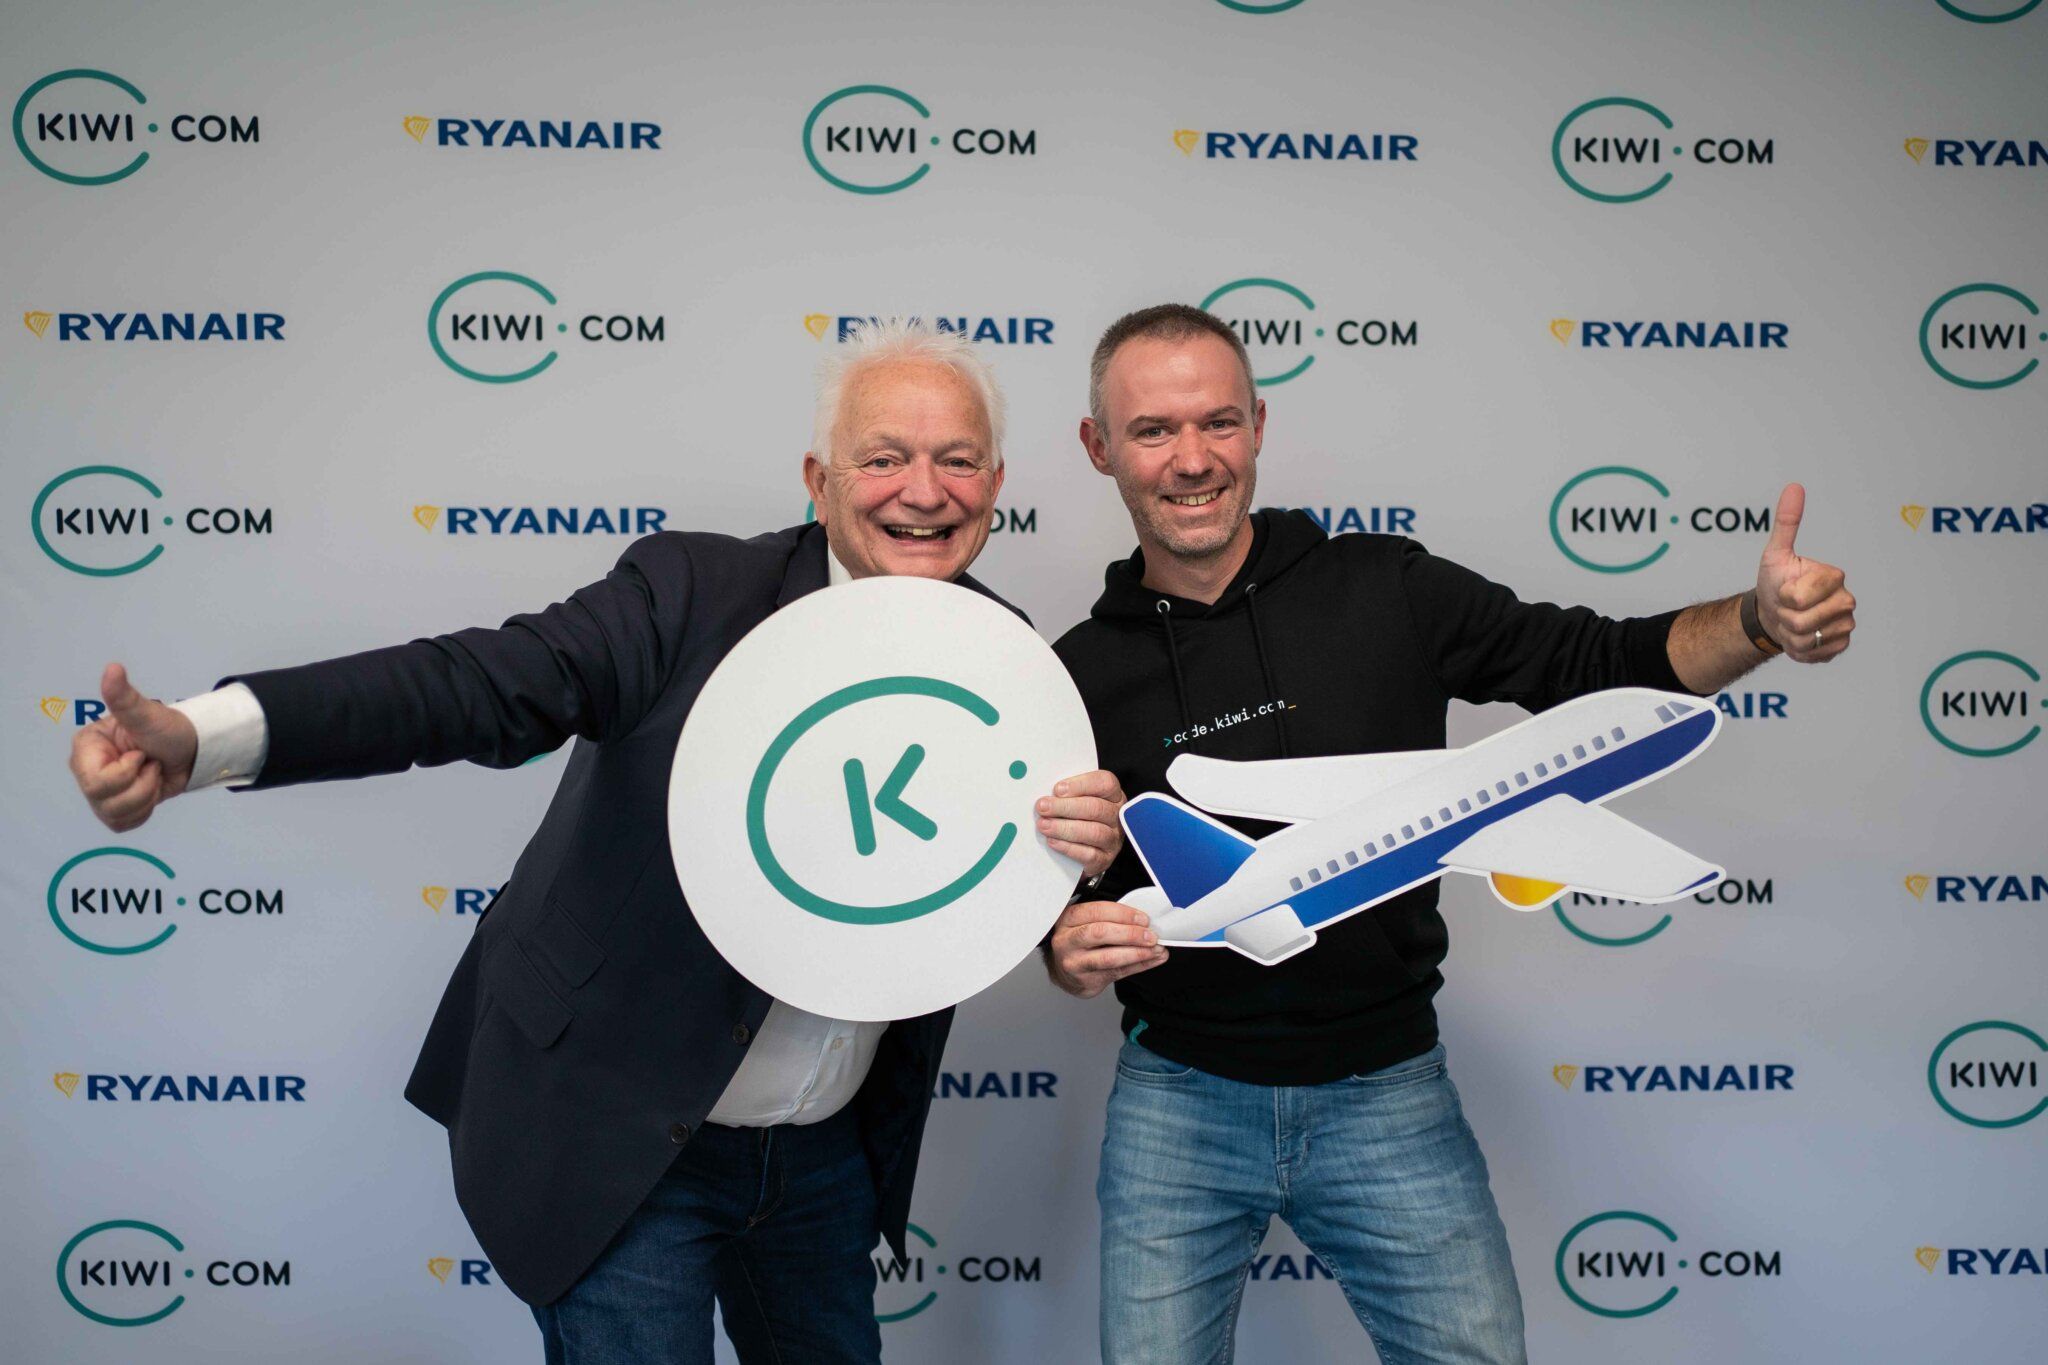 Kiwi and Ryanair exexutives celebrating the partnership